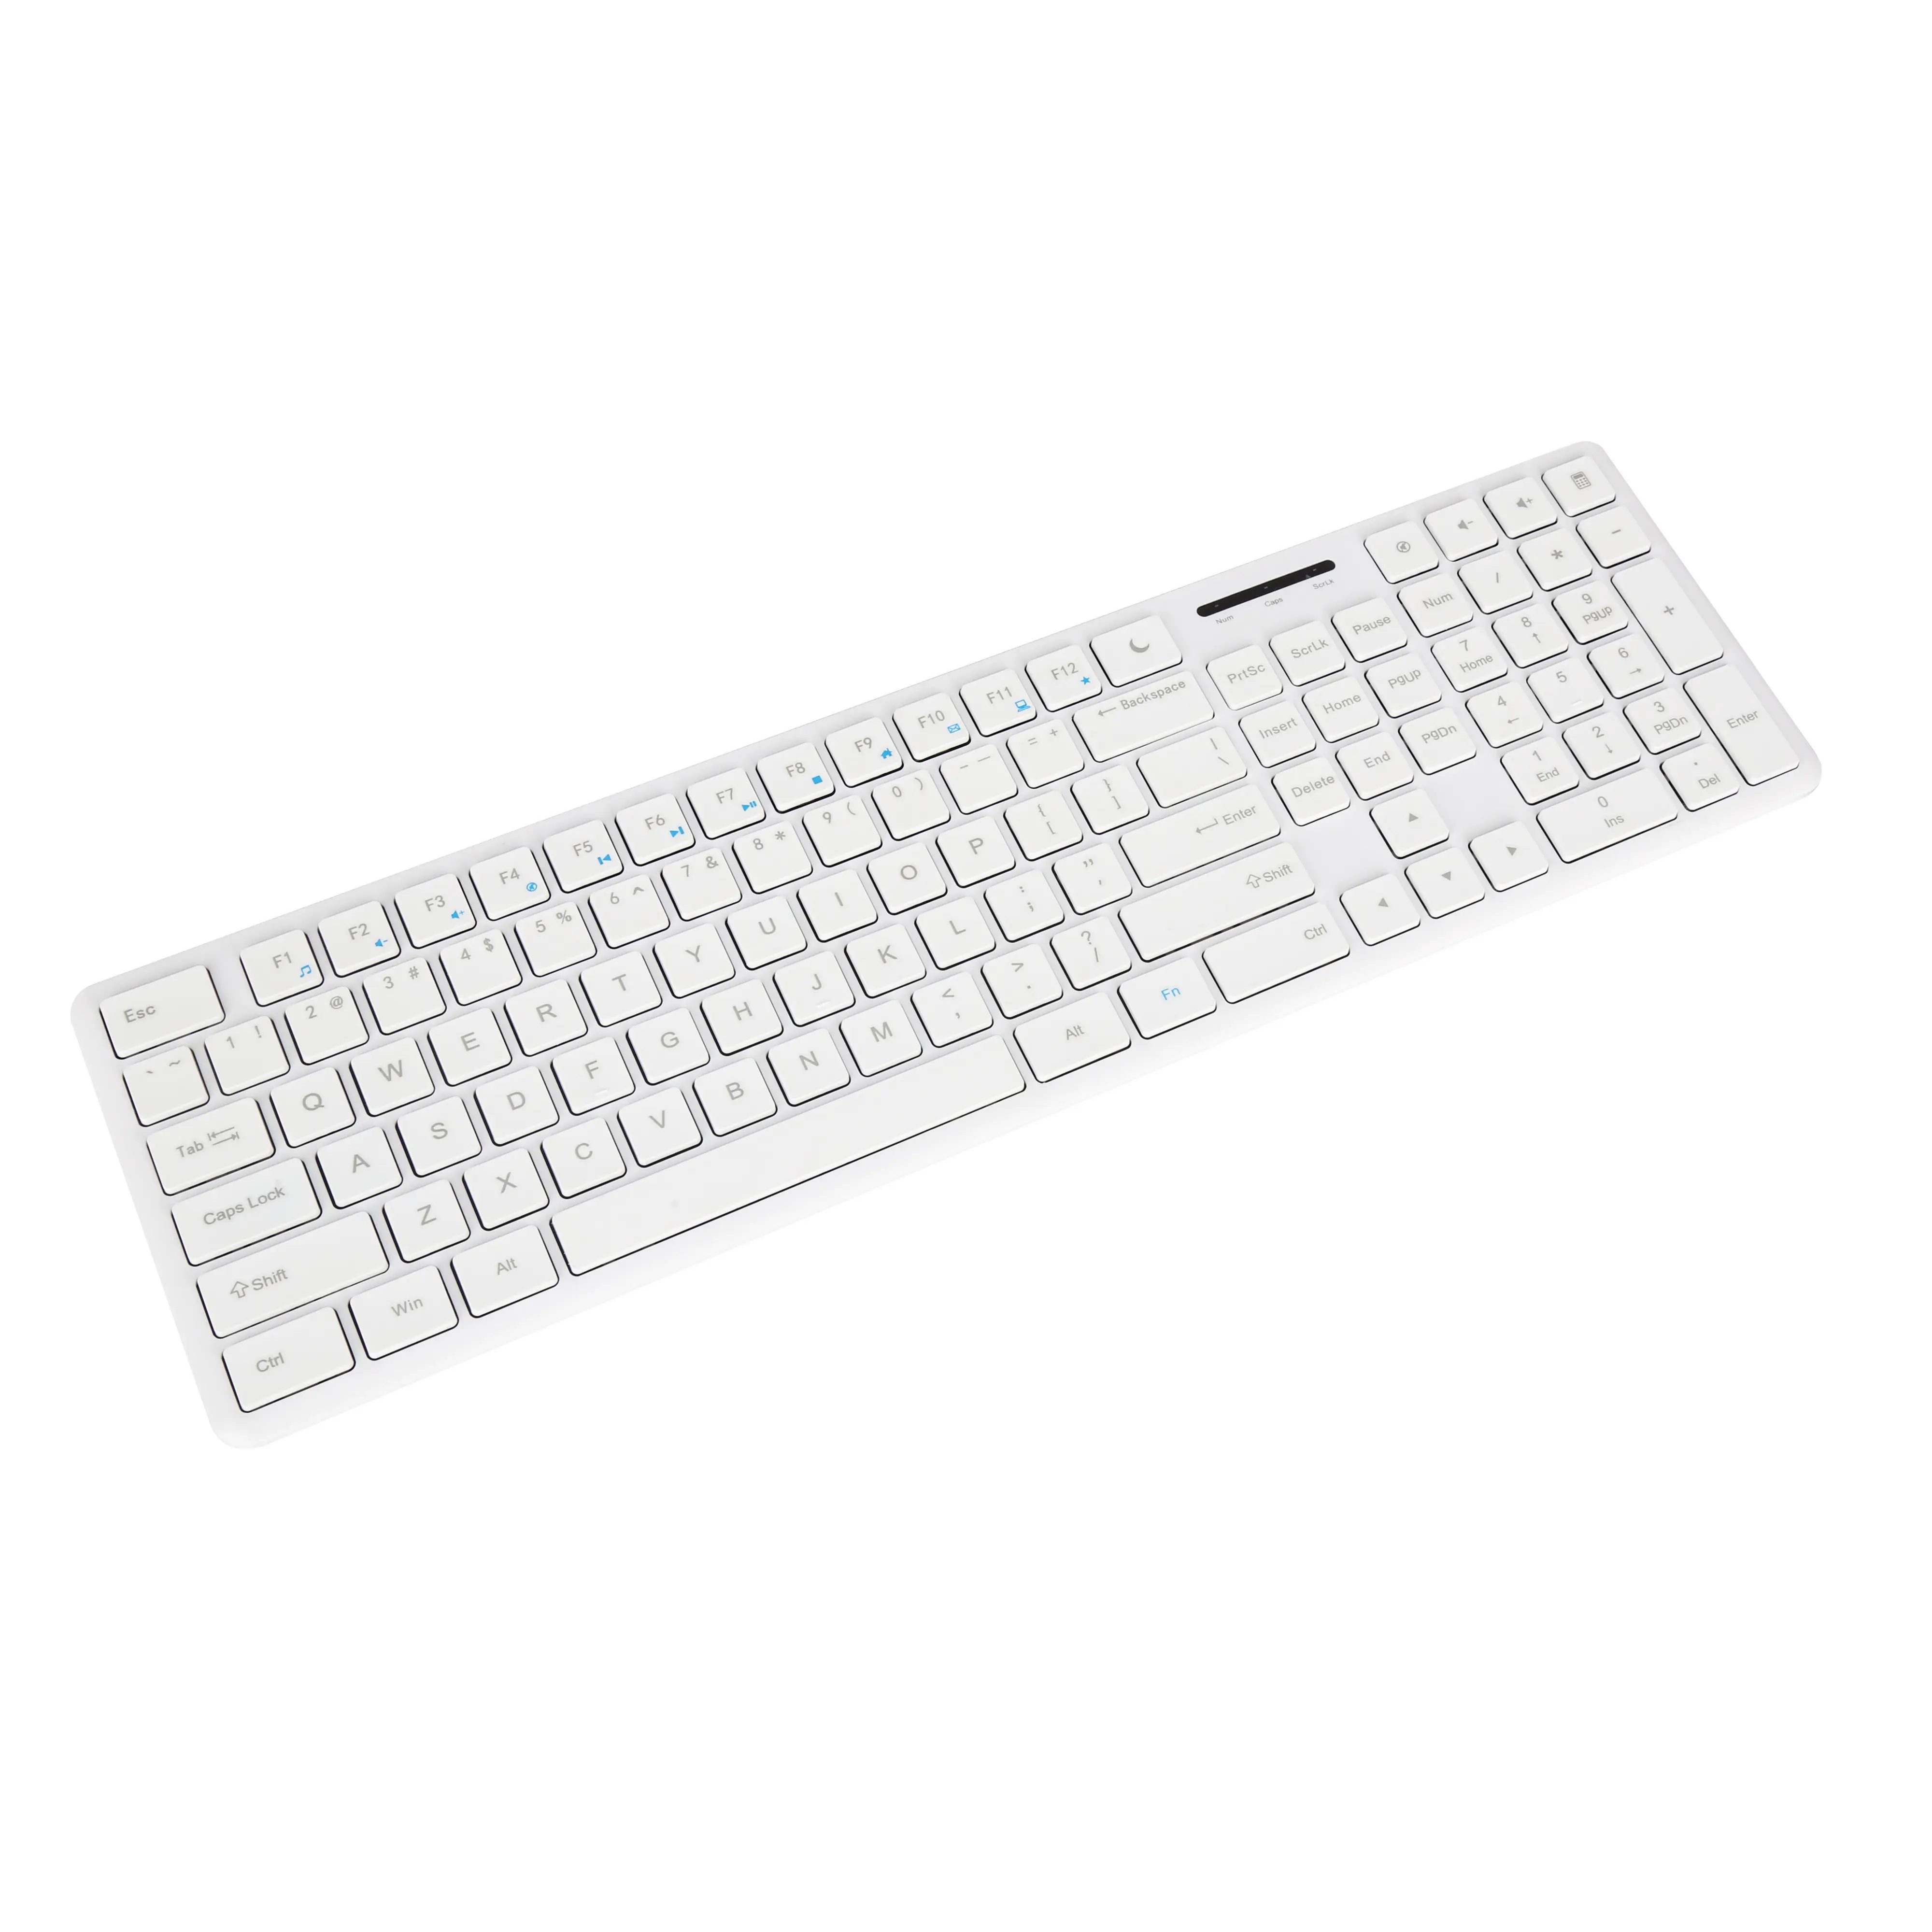 SAMA New Magic Keyboard Wired USB Laptop Computer Keyboard Portable PC Magic Keyboard For Microsoft Tablet